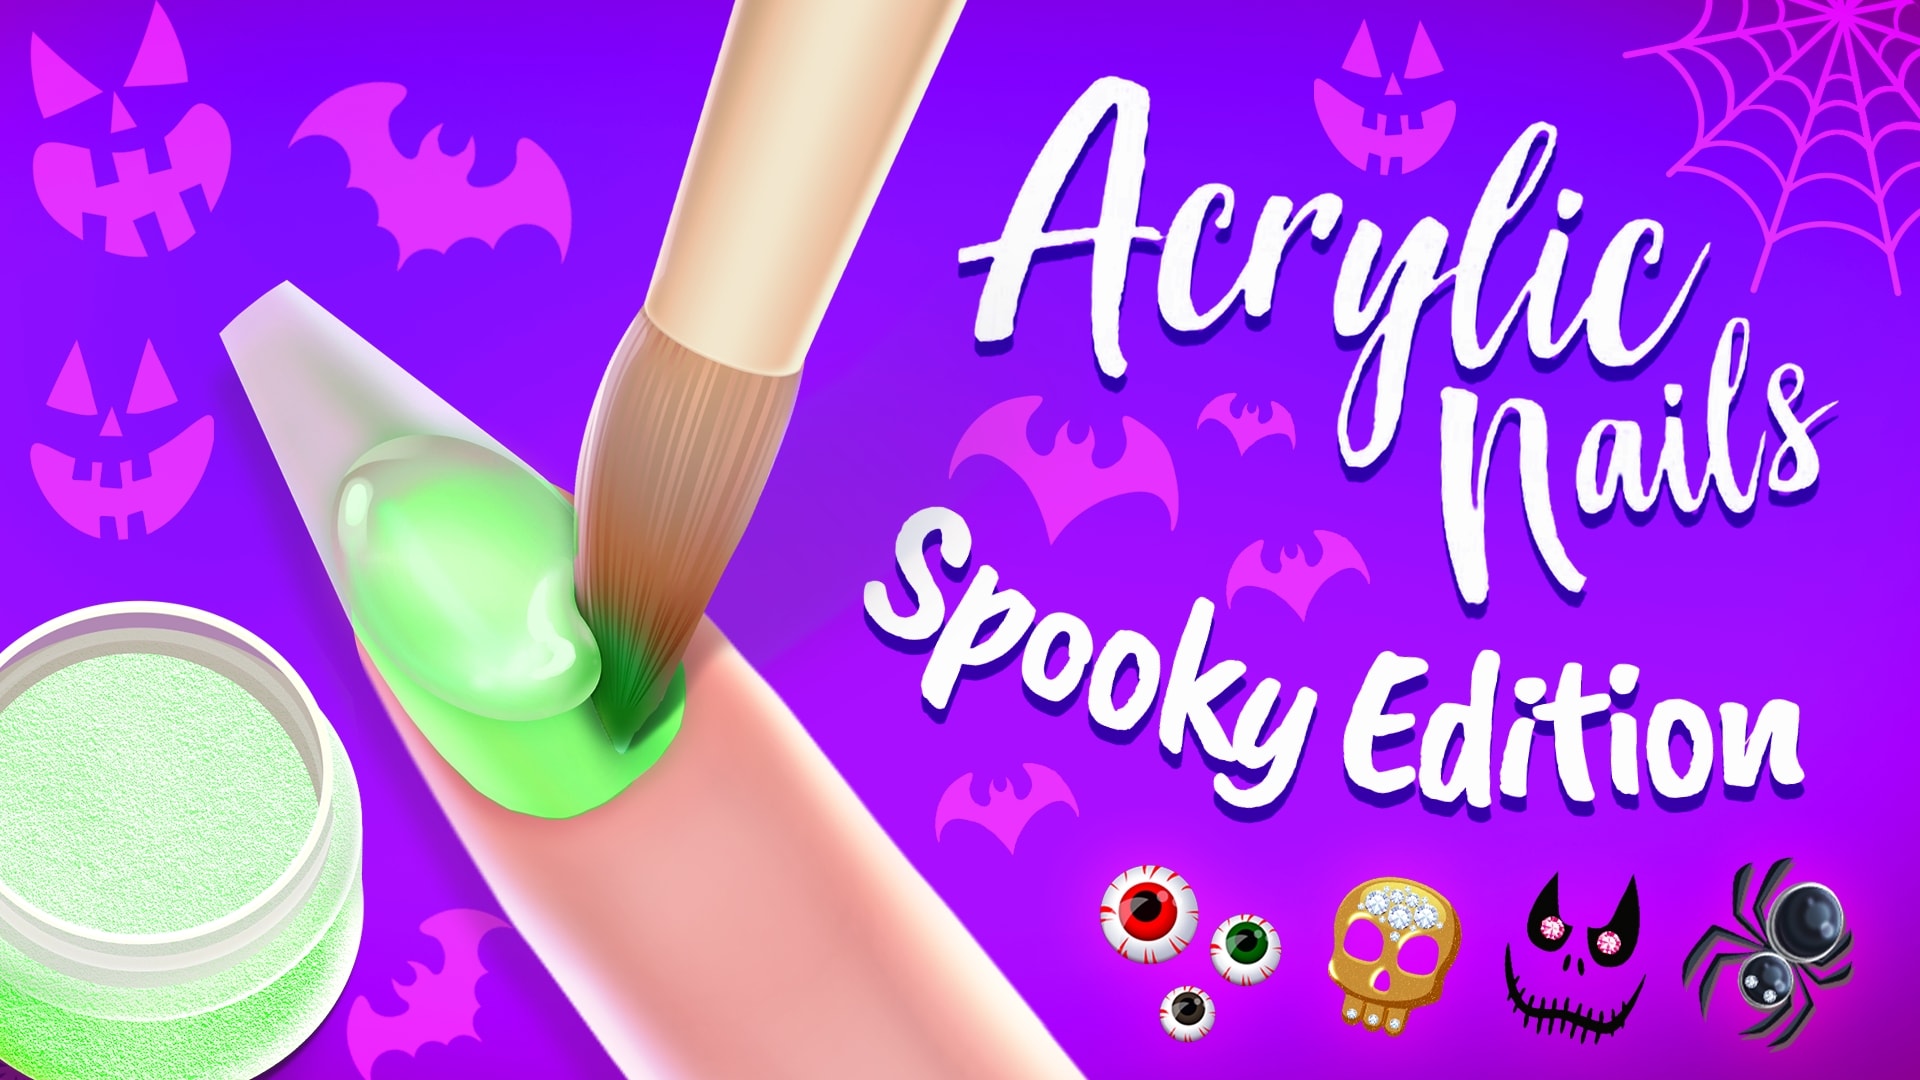 Acrylic Nails!: Spooky Edition